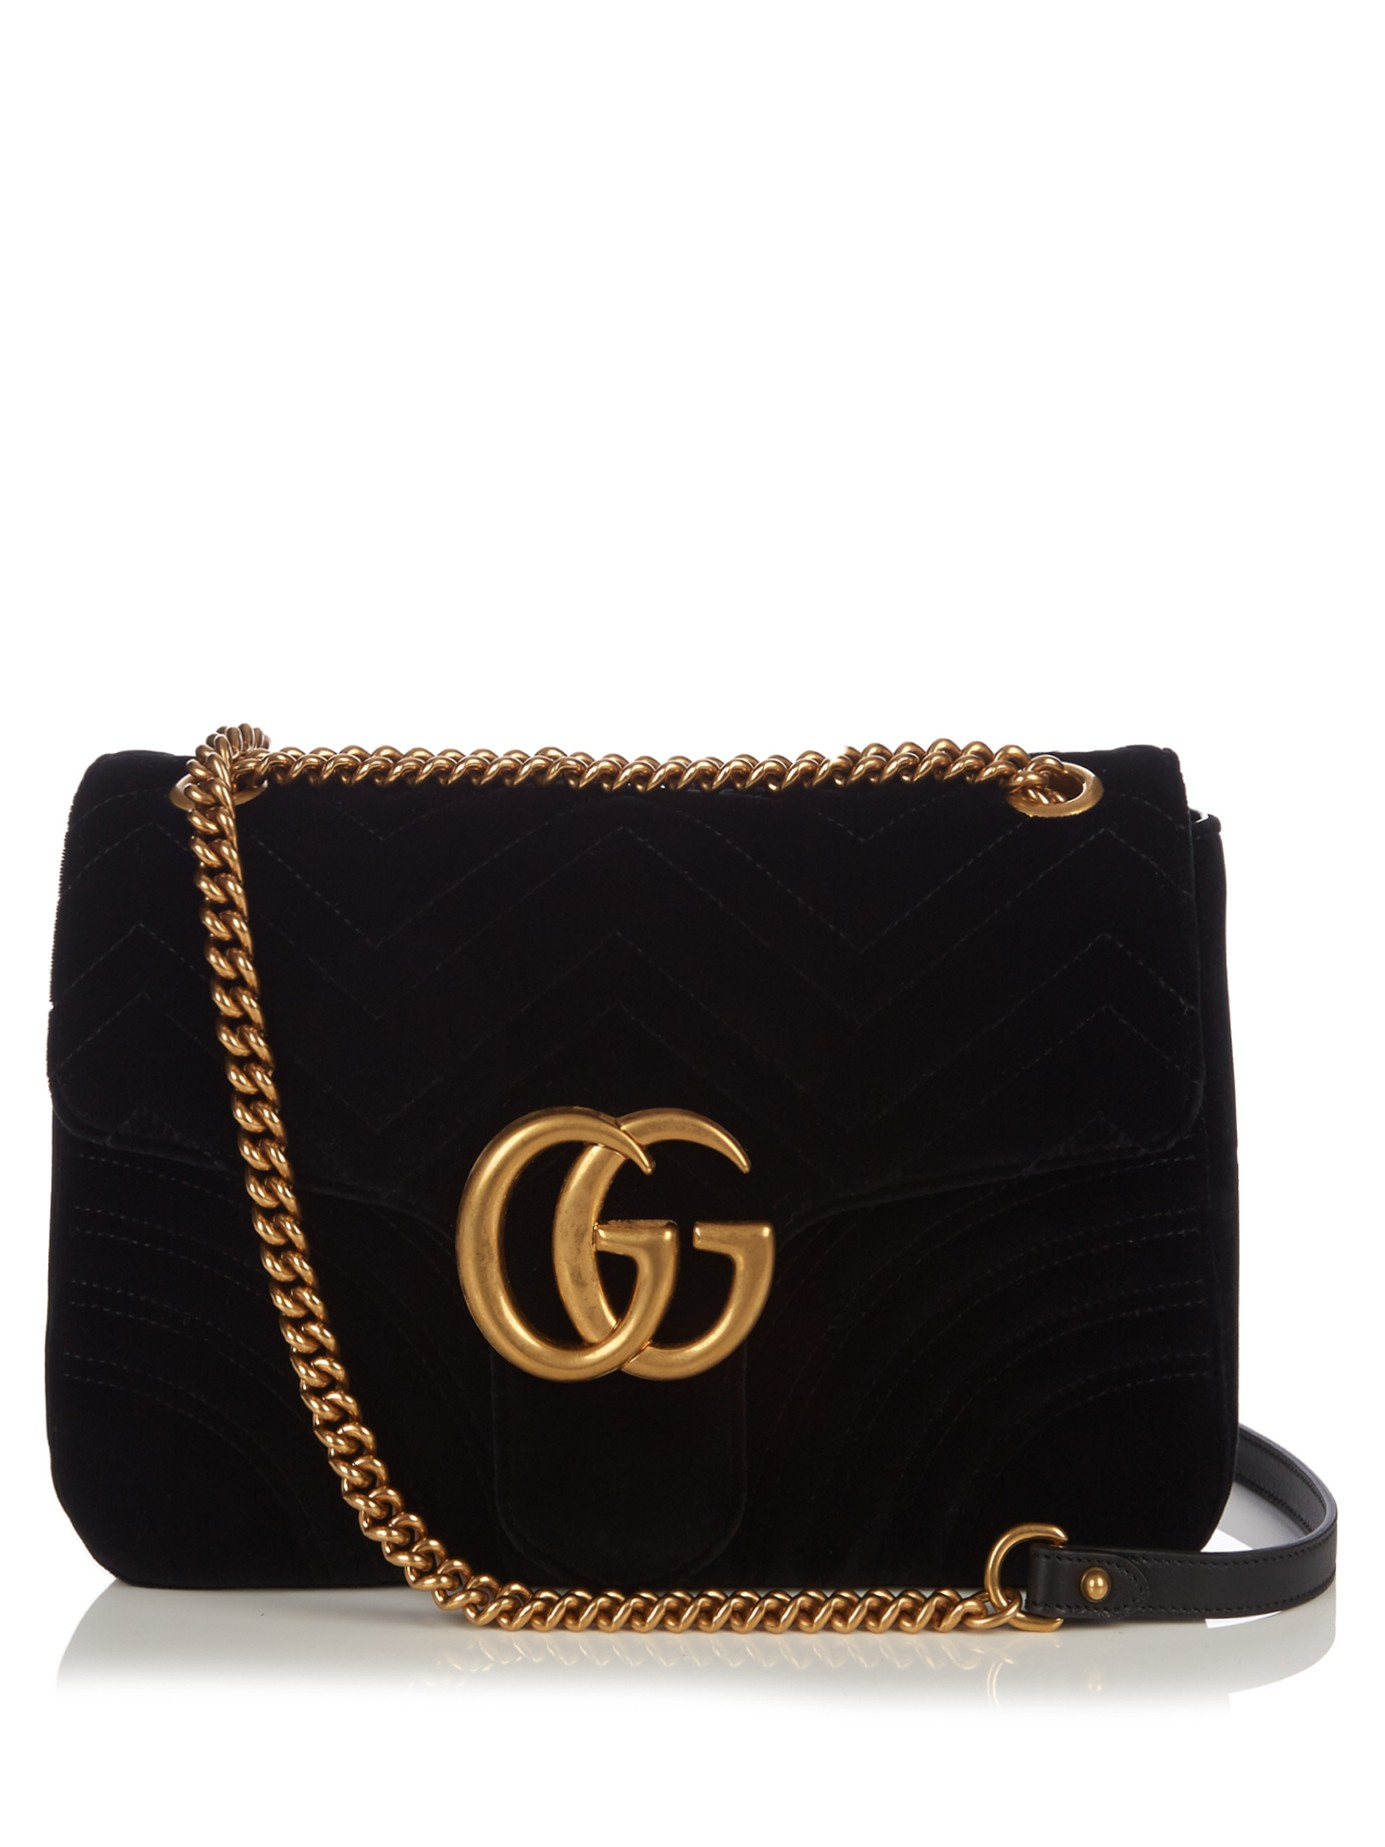 Gucci Gg Marmont Chevron-velvet Shoulder Bag in Black - Lyst